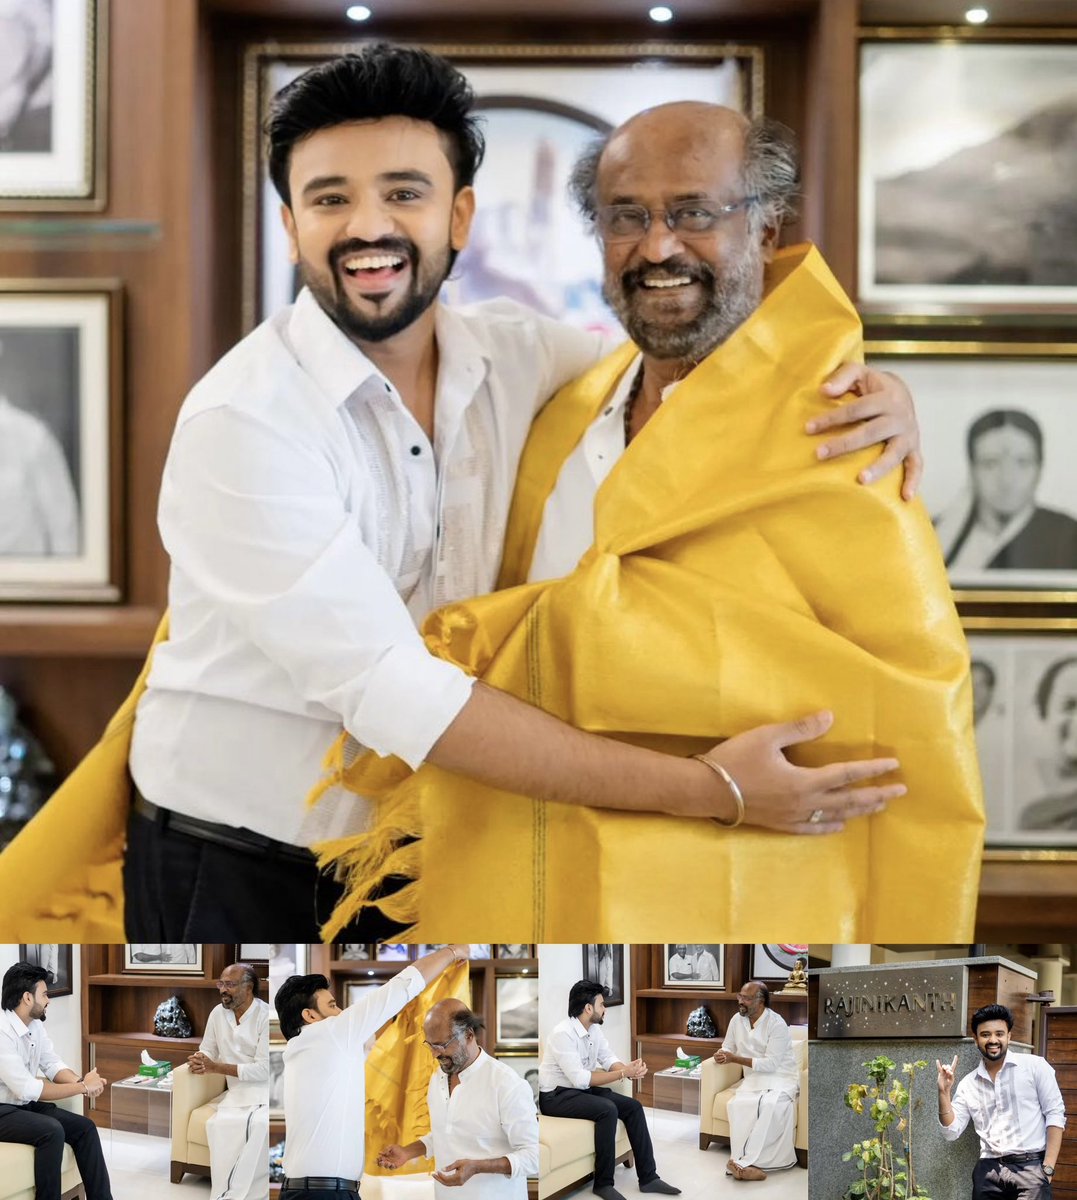 More pics of SUN tv anchor Azhar meeting up #Thalaivar on his birthday to get blessings from him ❤️

#Jailer | #Rajinikanth | #Rajinikanth𓃵 | #SuperstarRajinikanth | #superstar @rajinikanth | #moideenbhai | #lalsaalam | #Thalaivar171 | #MuthuvelPandian | @RIAZtheboss